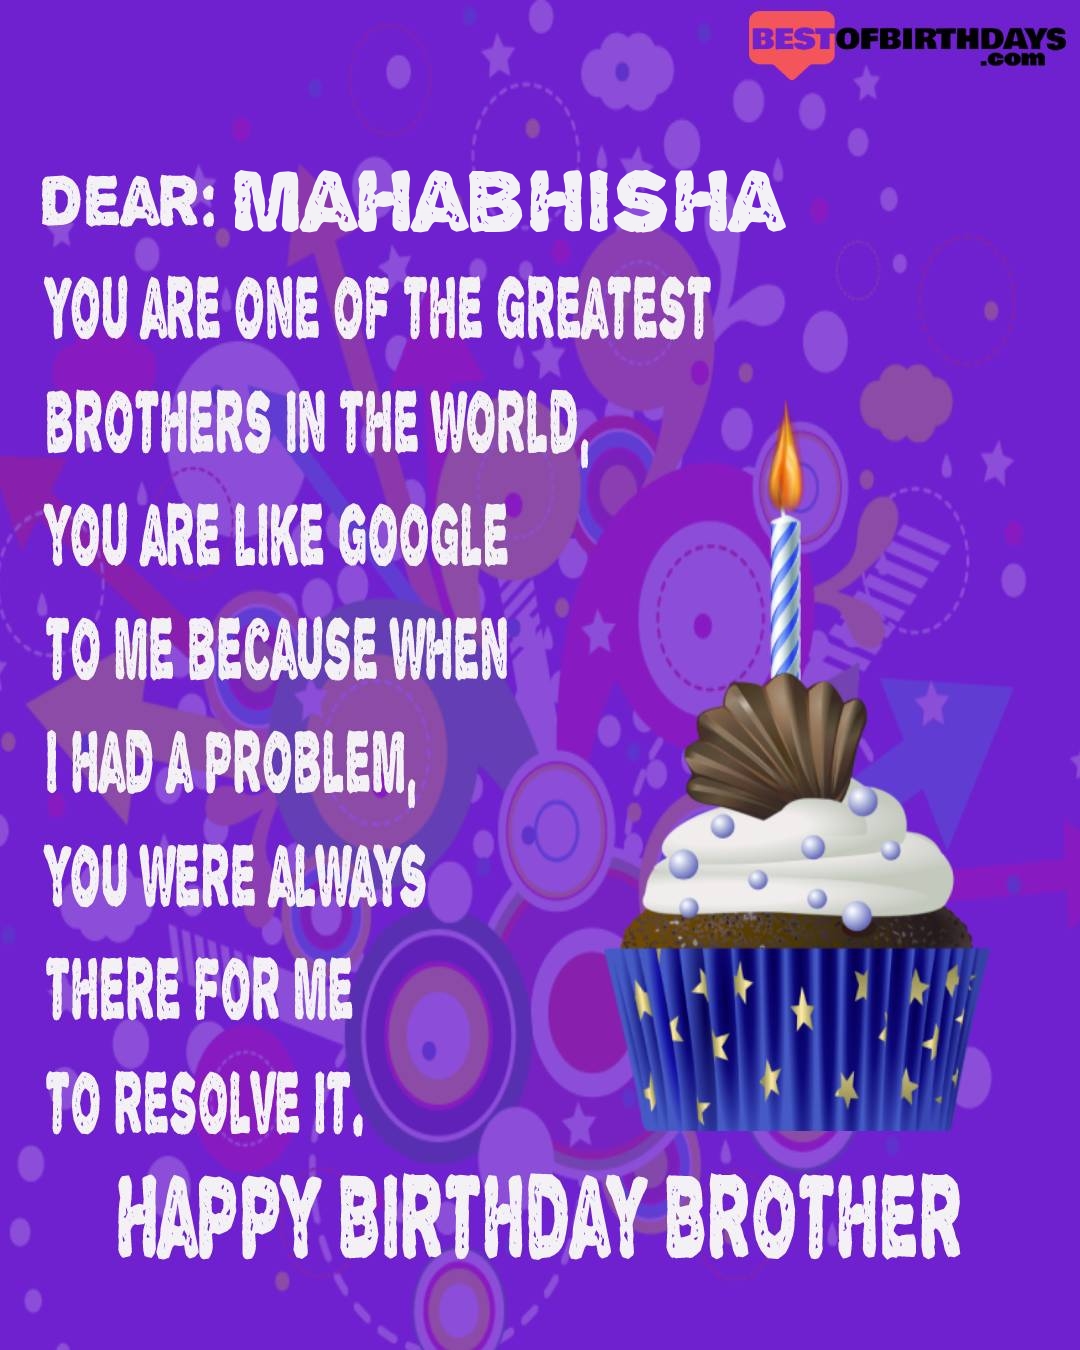 Happy birthday mahabhisha bhai brother bro